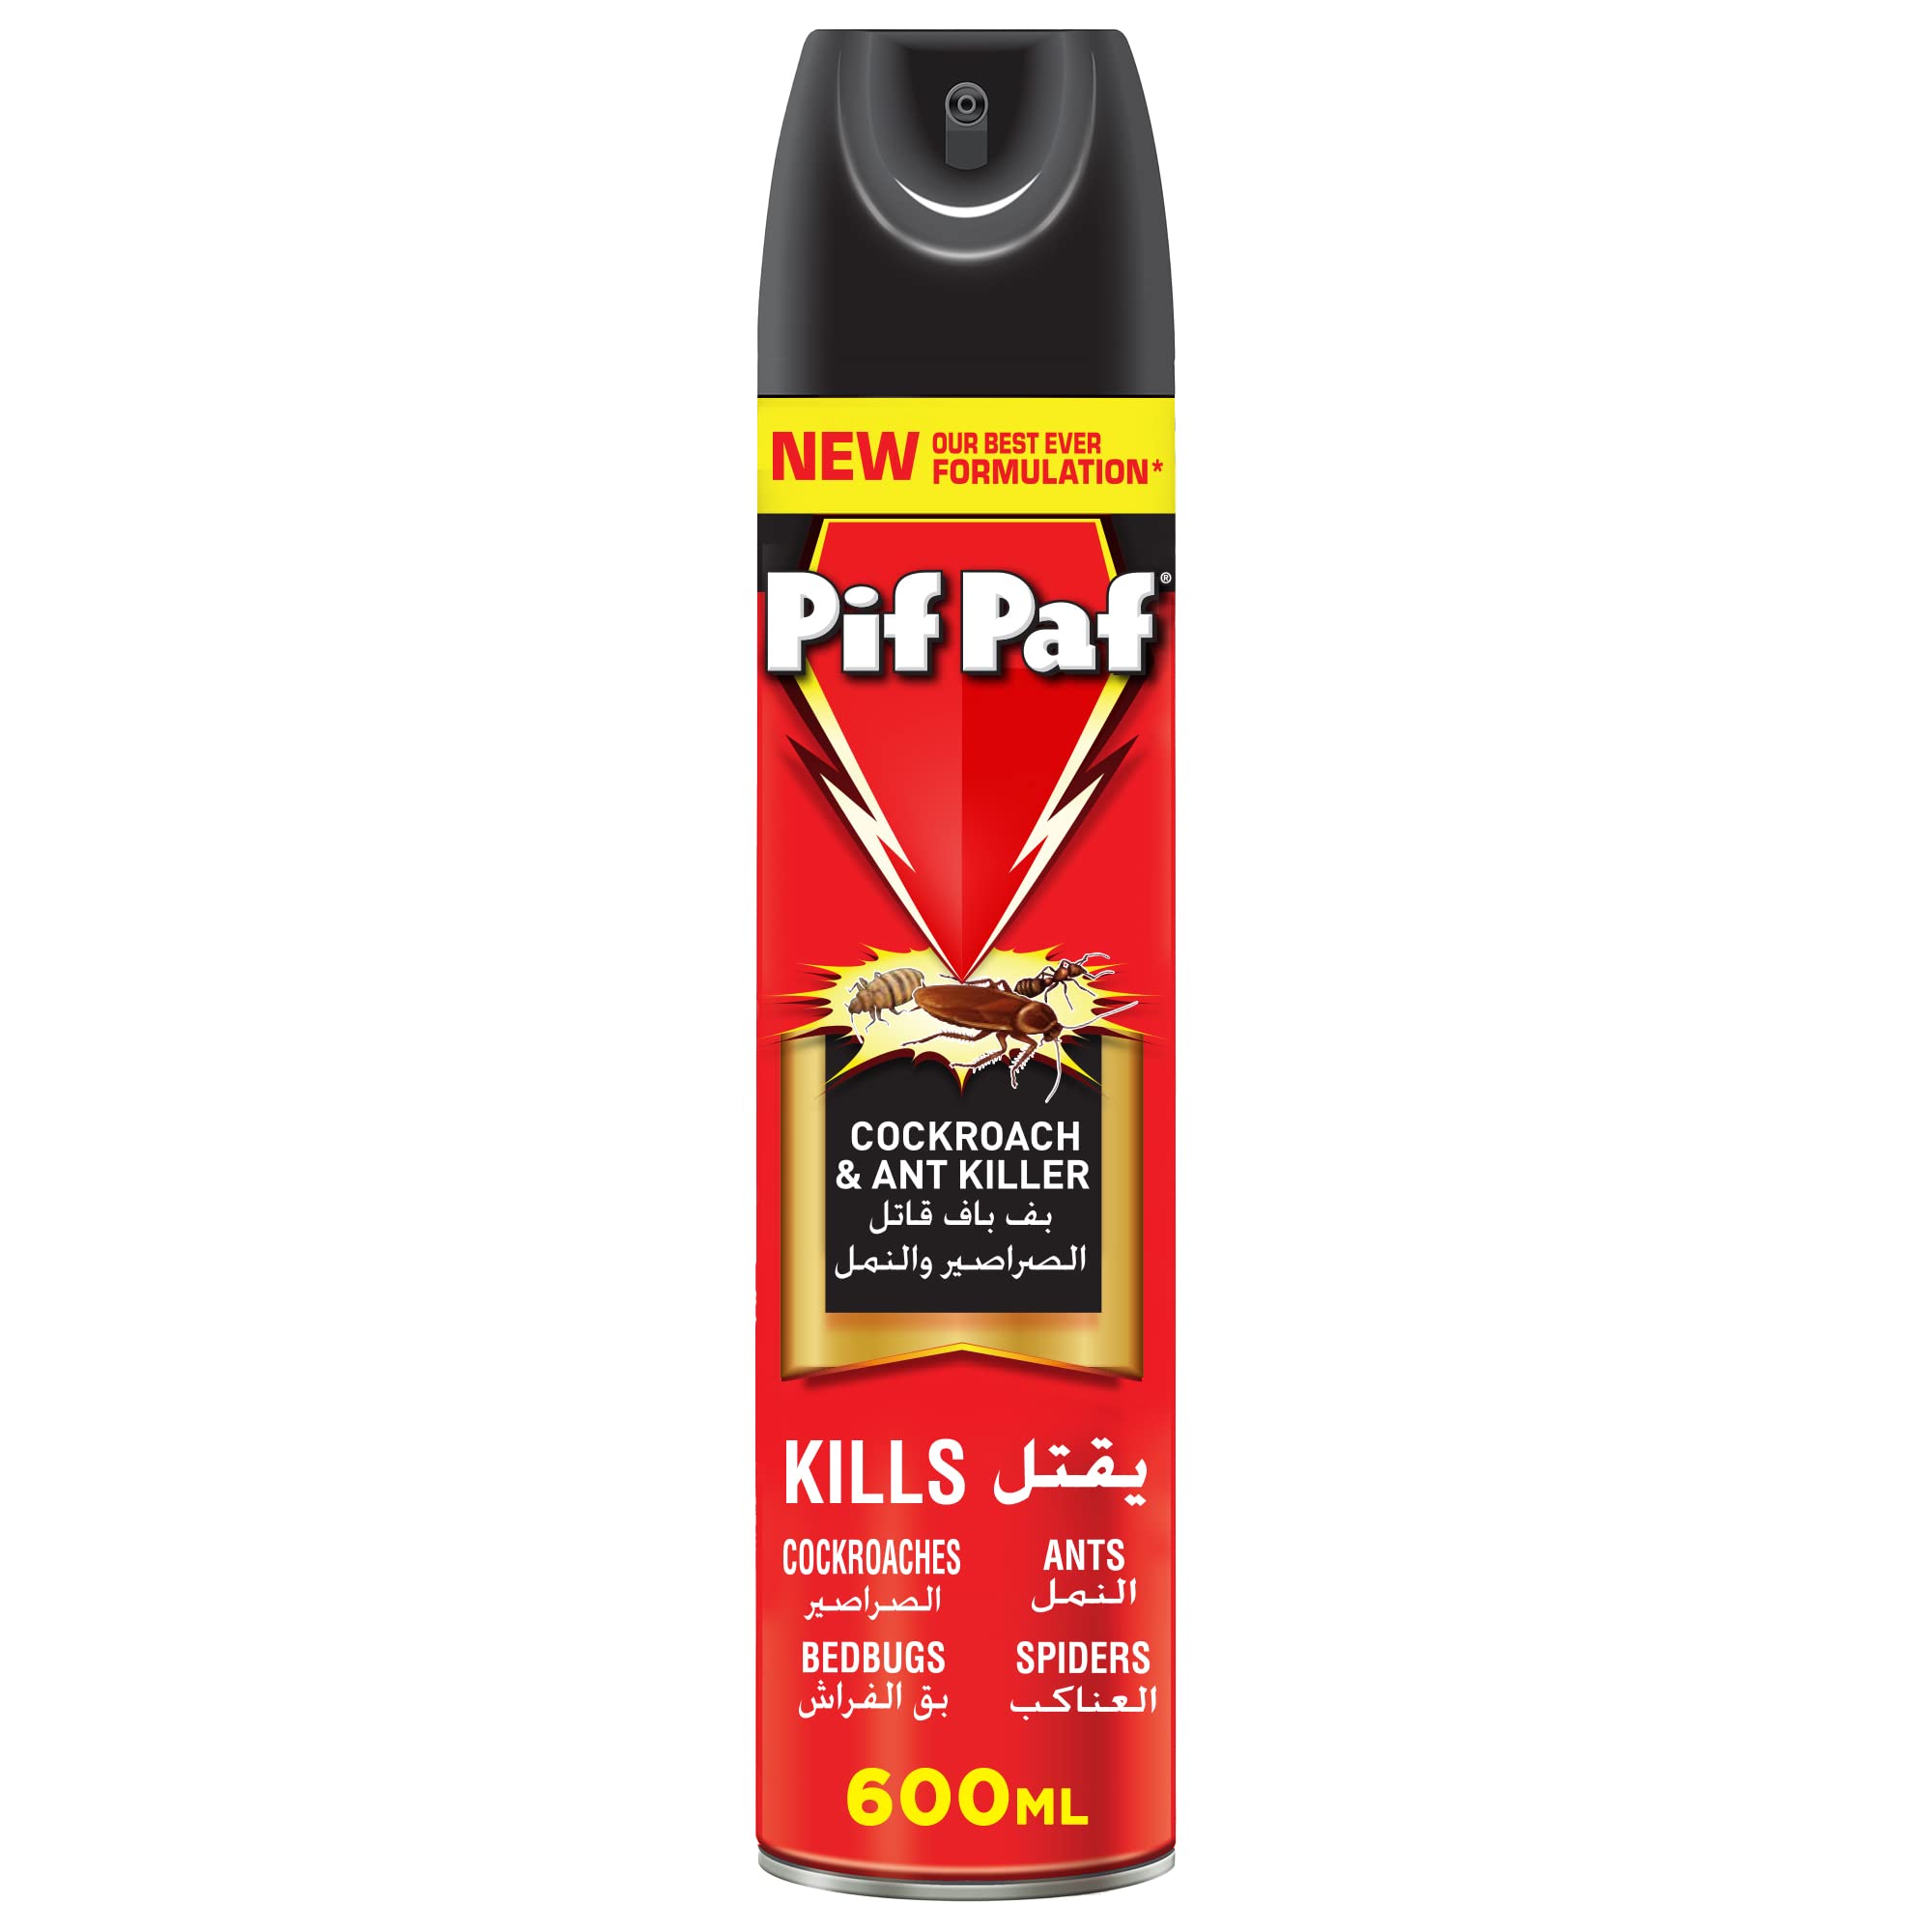 Pif Paf Cockroach & Ant Killer